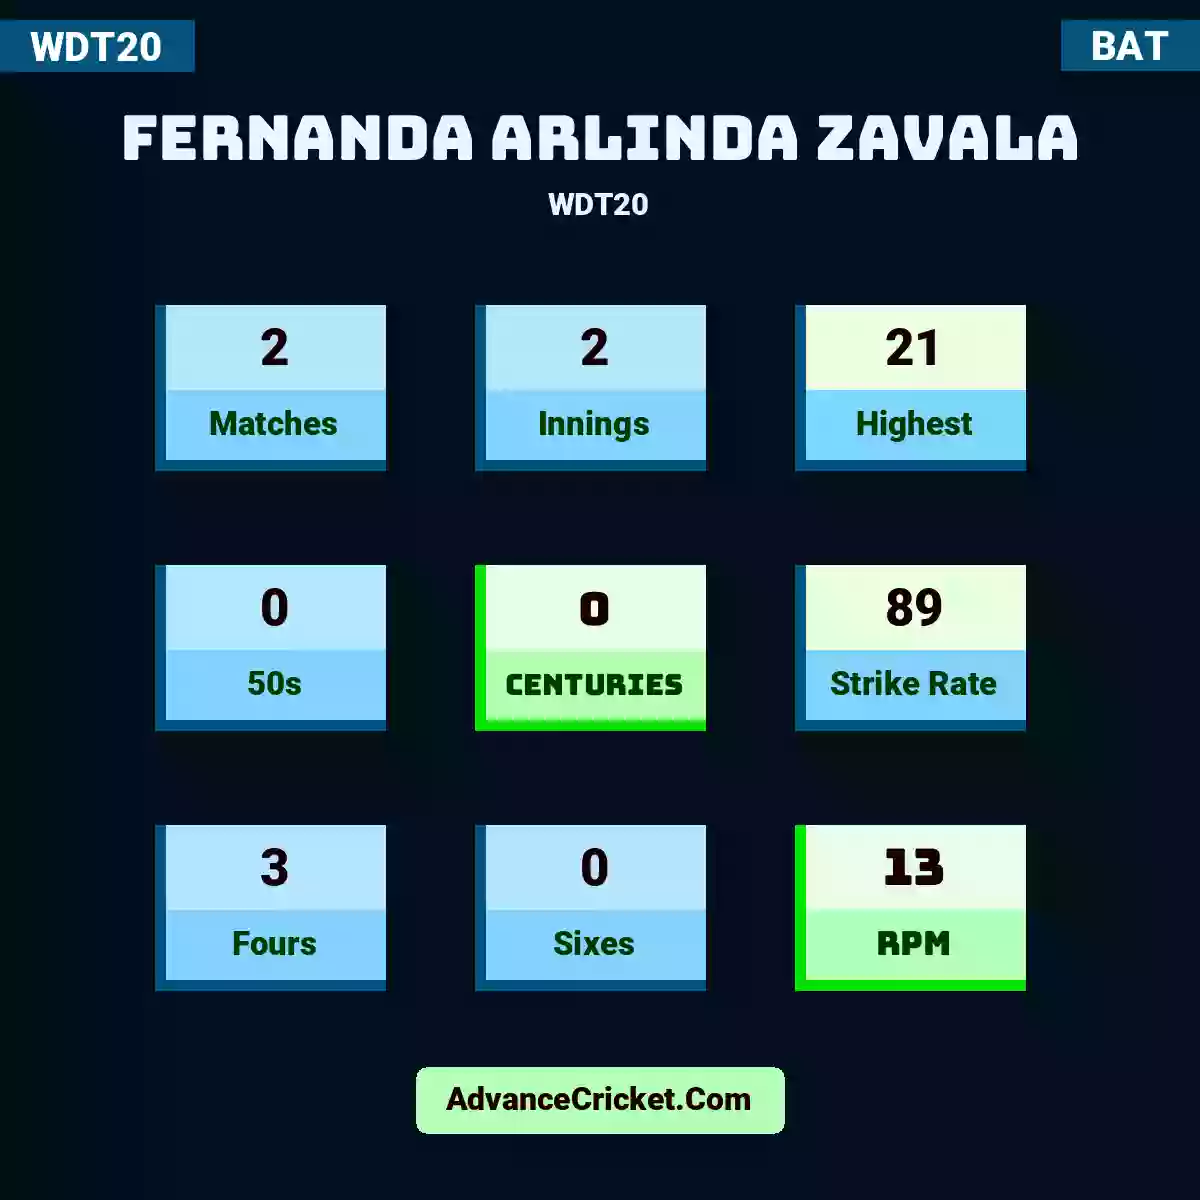 Fernanda Arlinda Zavala WDT20 , Fernanda Arlinda Zavala played 2 matches, scored 21 runs as highest, 0 half-centuries, and 0 centuries, with a strike rate of 89. F.Arlinda.Zavala hit 3 fours and 0 sixes, with an RPM of 13.